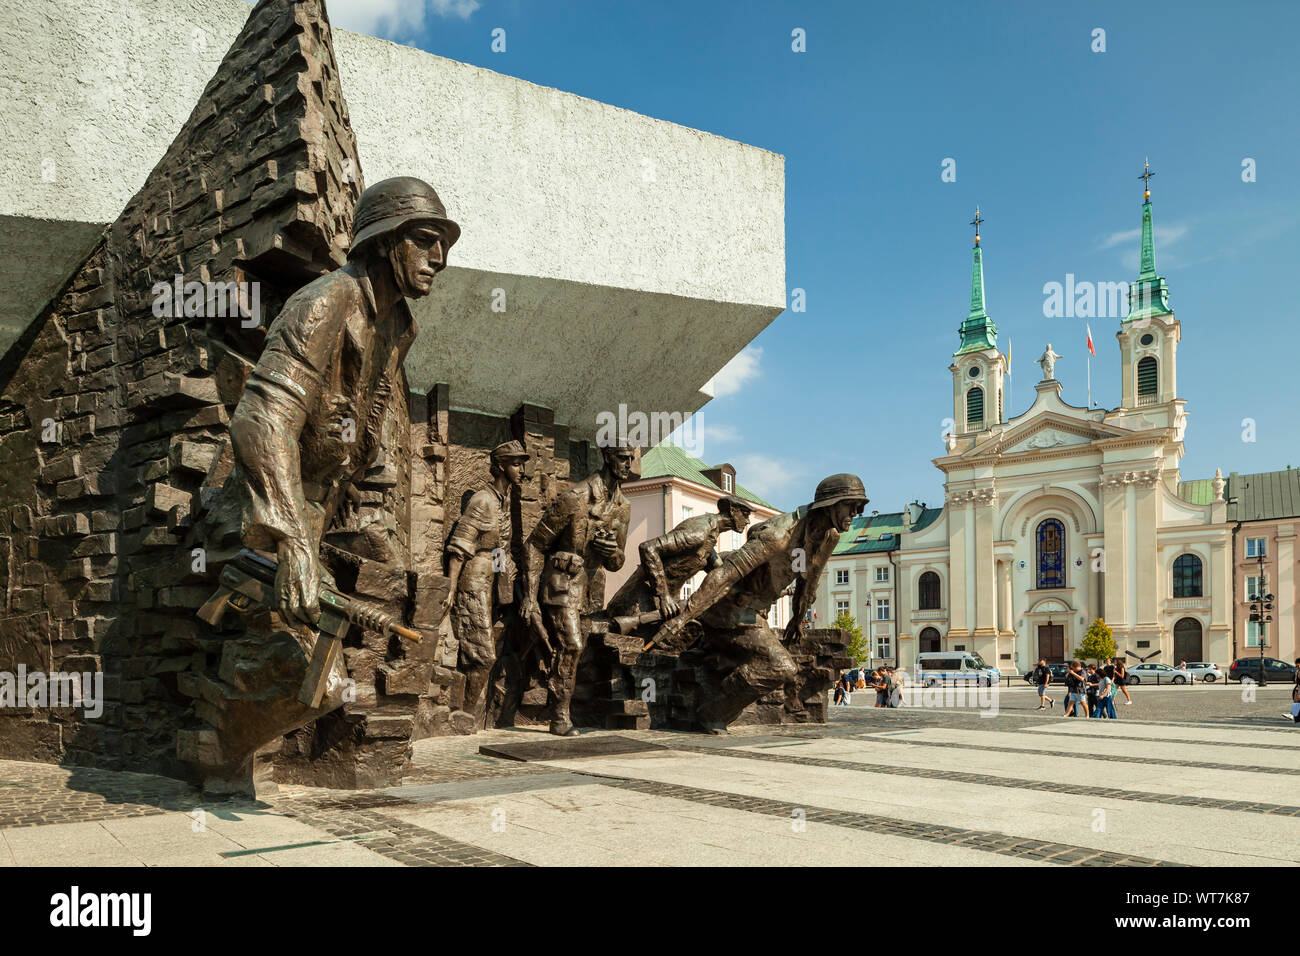 Warsaw Uprising monument in Warsaw, Poland. Stock Photo